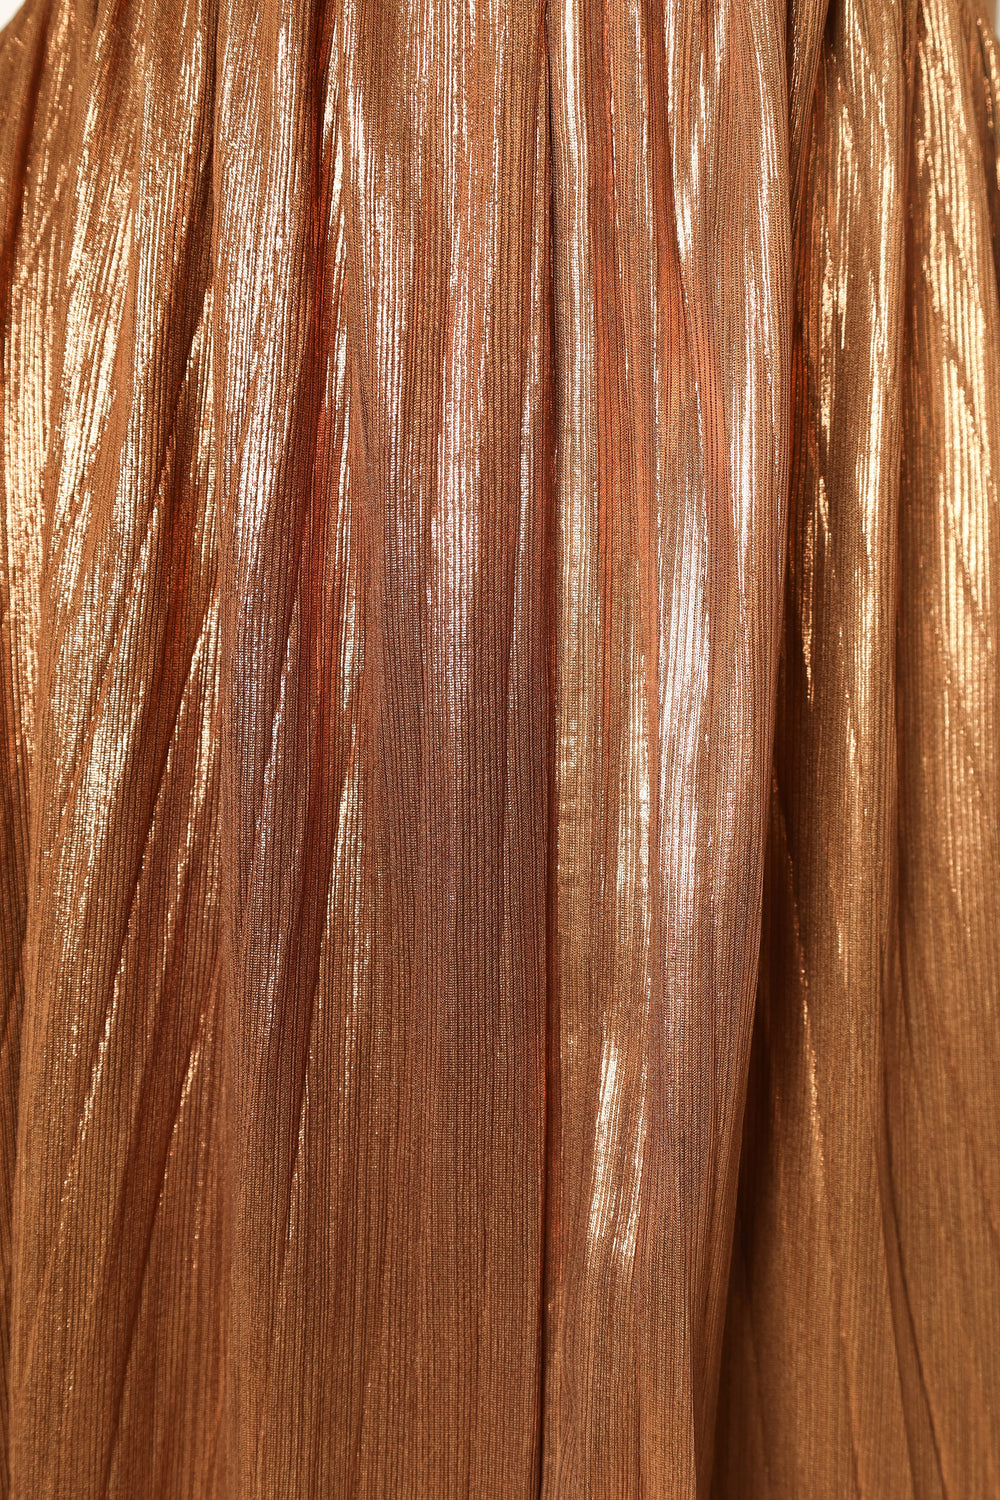 DRESSES @Shania Pleated Maxi Dress - Bronze